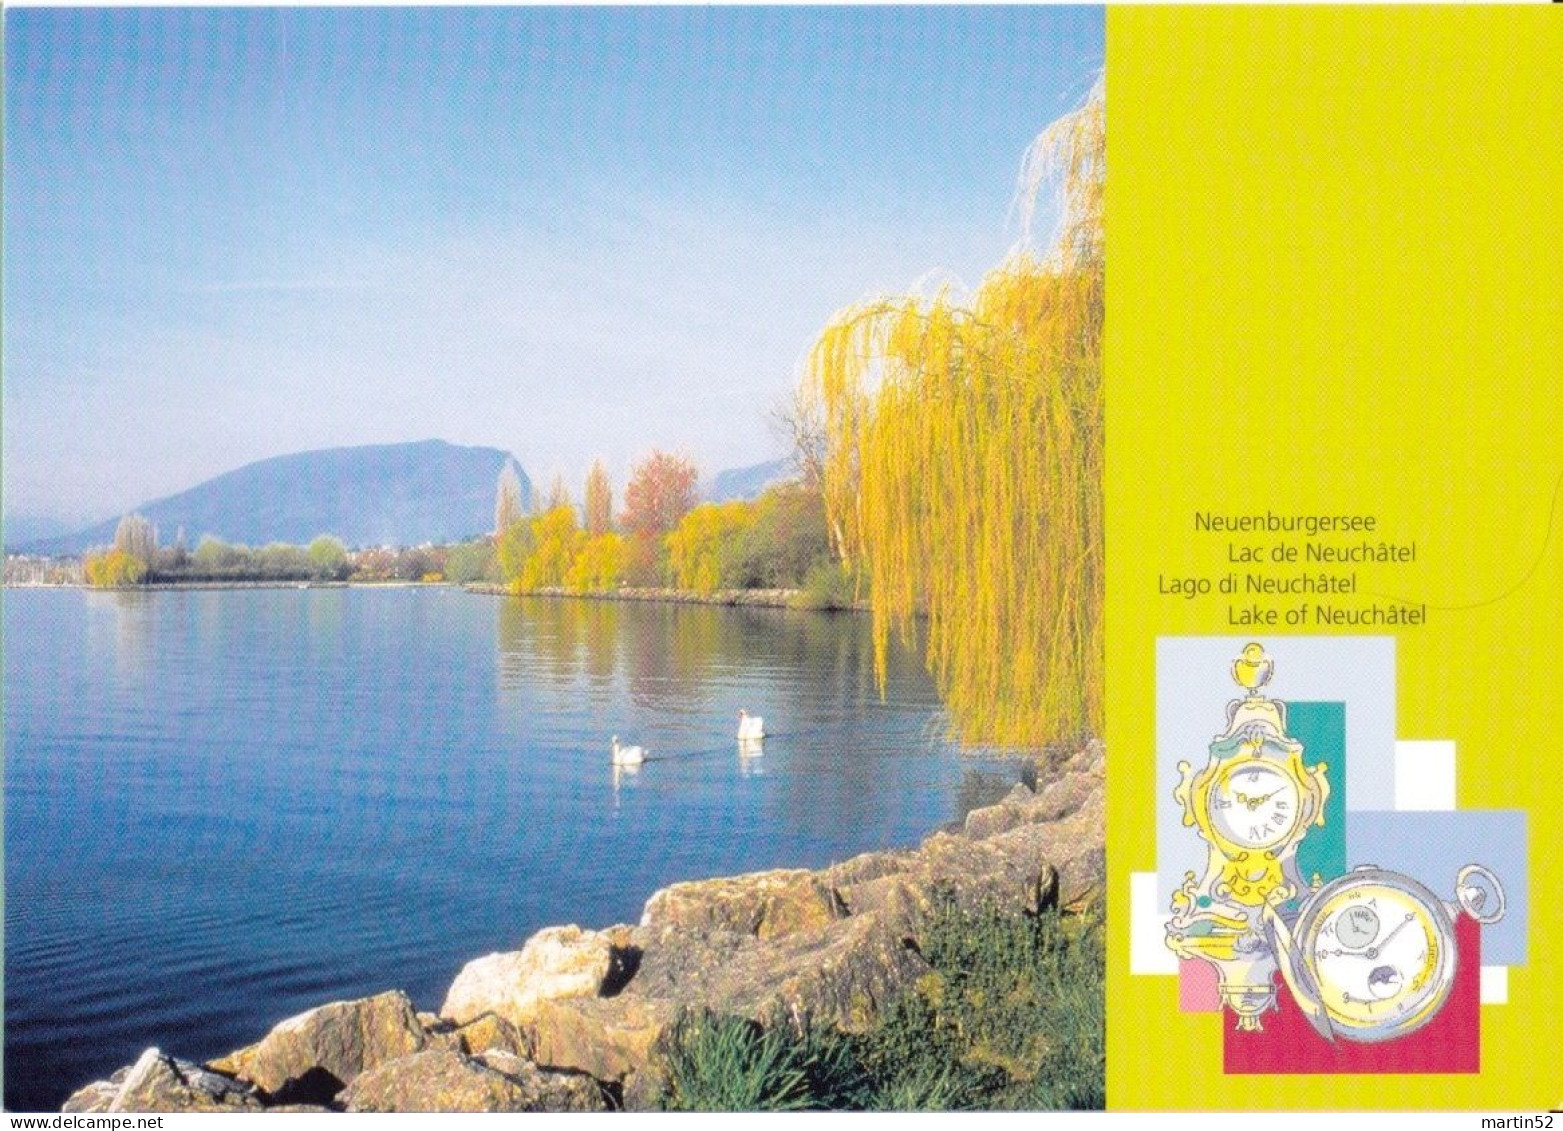 Schweiz Suisse 2002: Neuenburger See (Uhren) Lac De Neuchâtel (Pendules) CPI Entier / Bild-PK (ungelaufen Non Circulé) - Orologeria